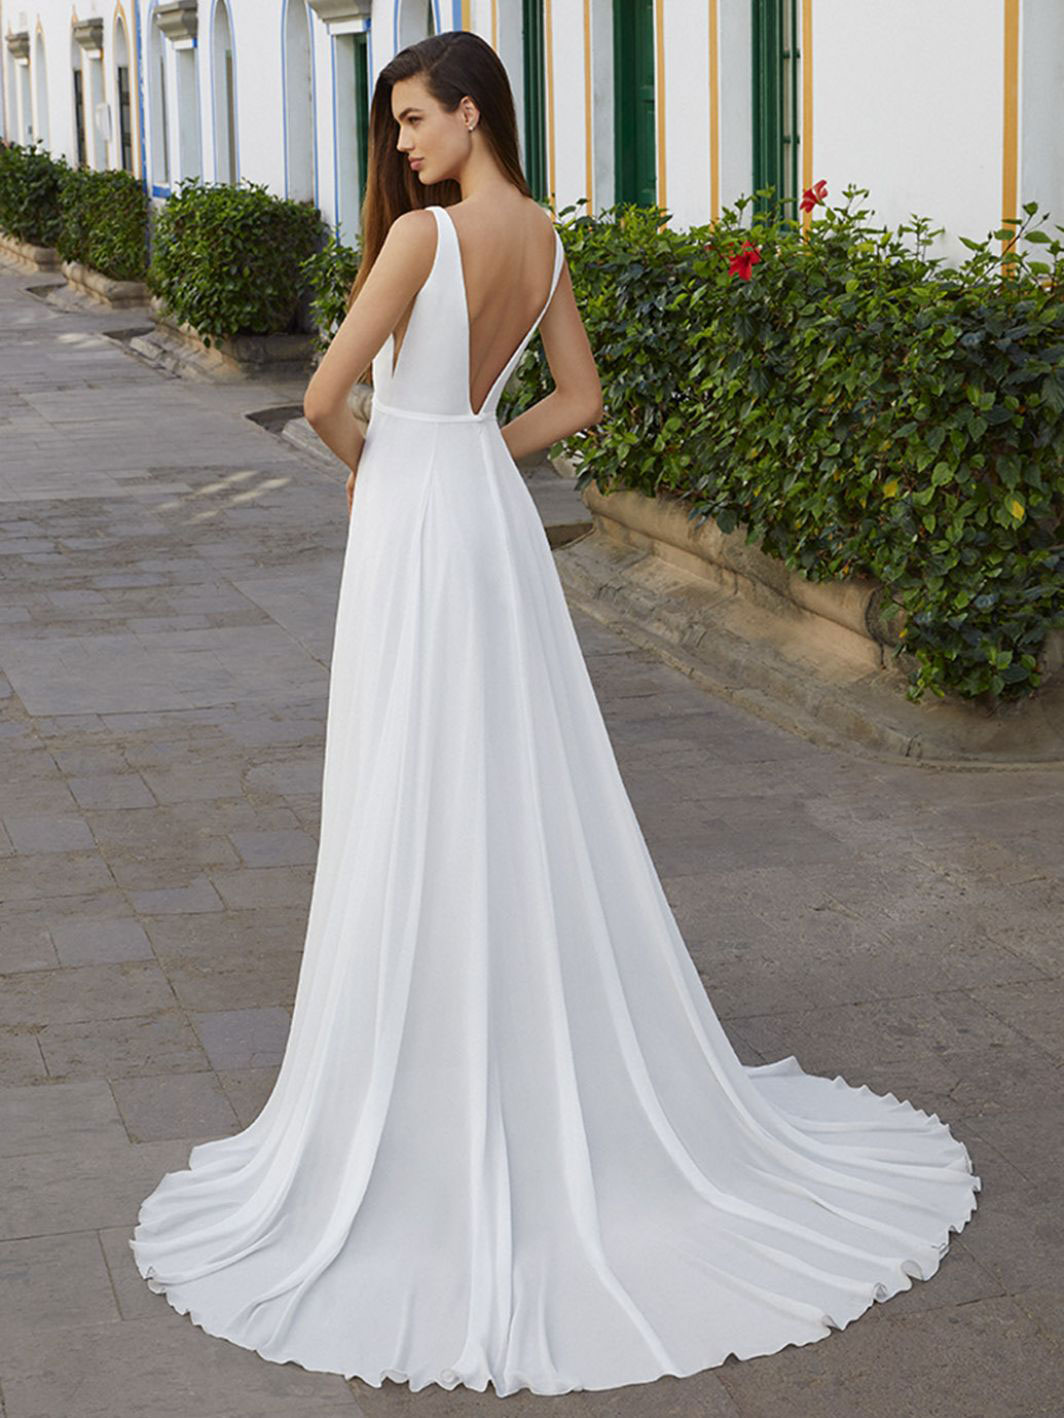 Bree wedding dress by Enzoani